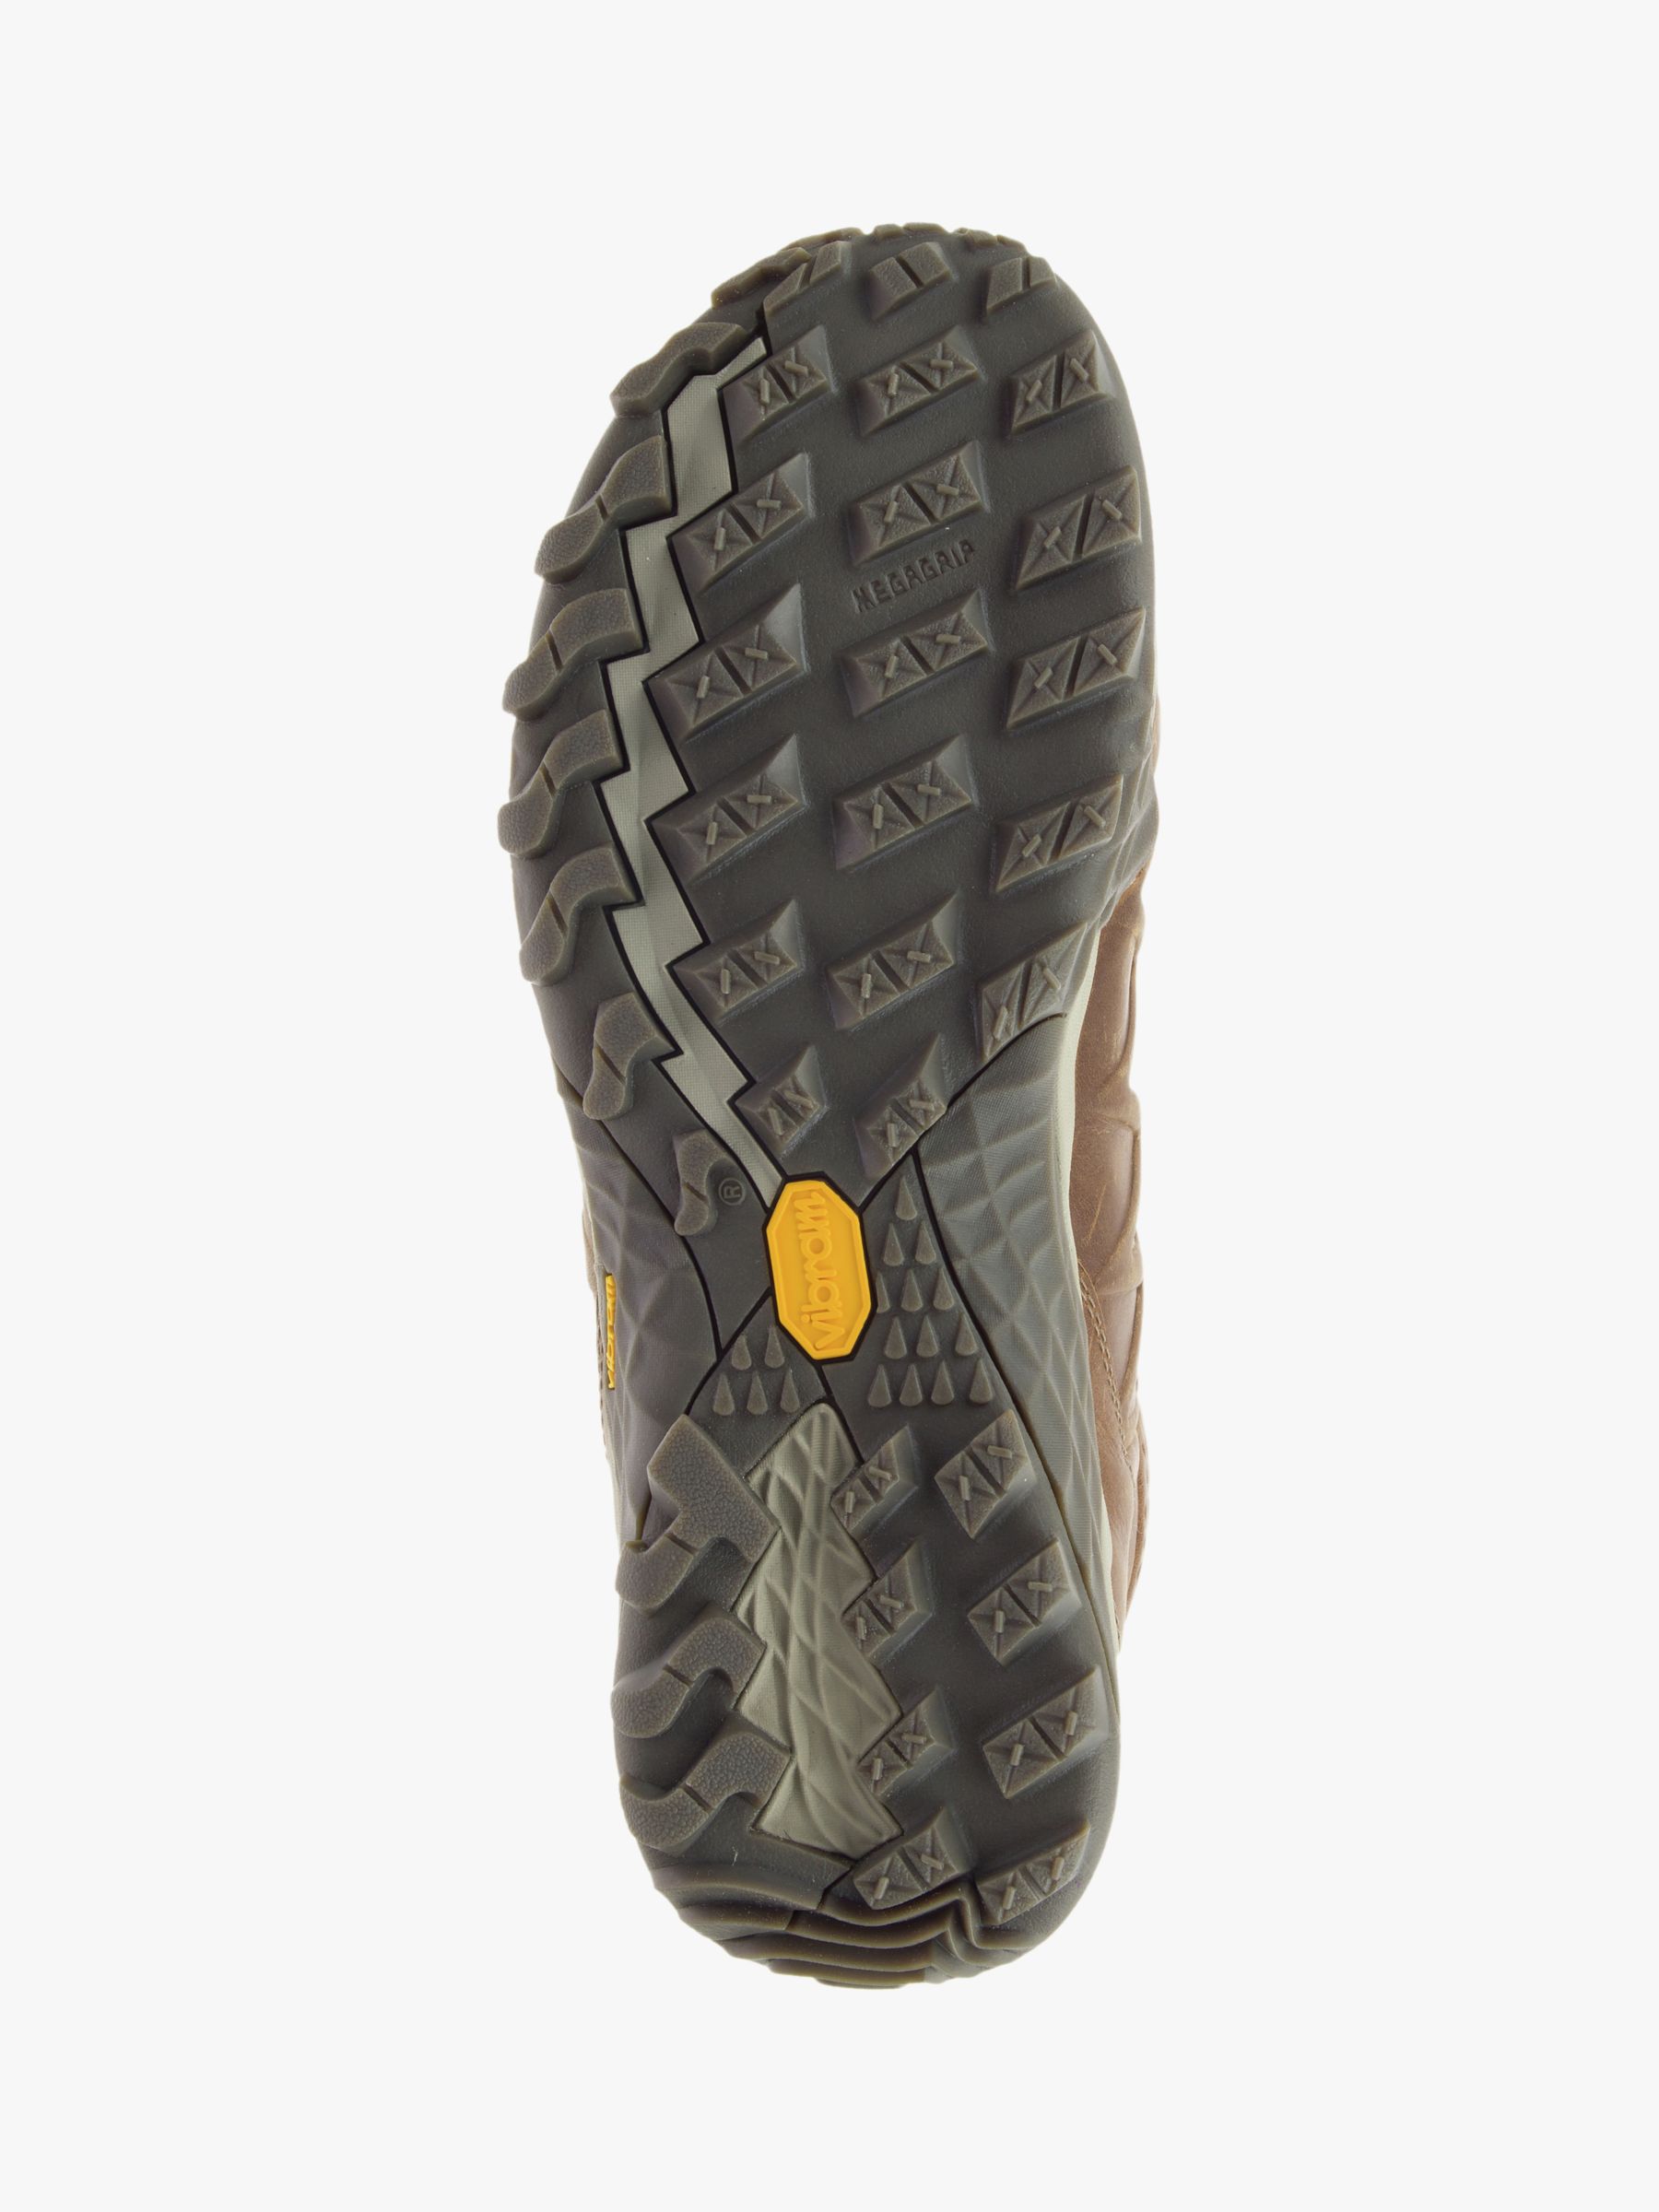 Merrell Siren 3 Peak Mid Women S Waterproof Walking Shoes Earth At John Lewis Partners